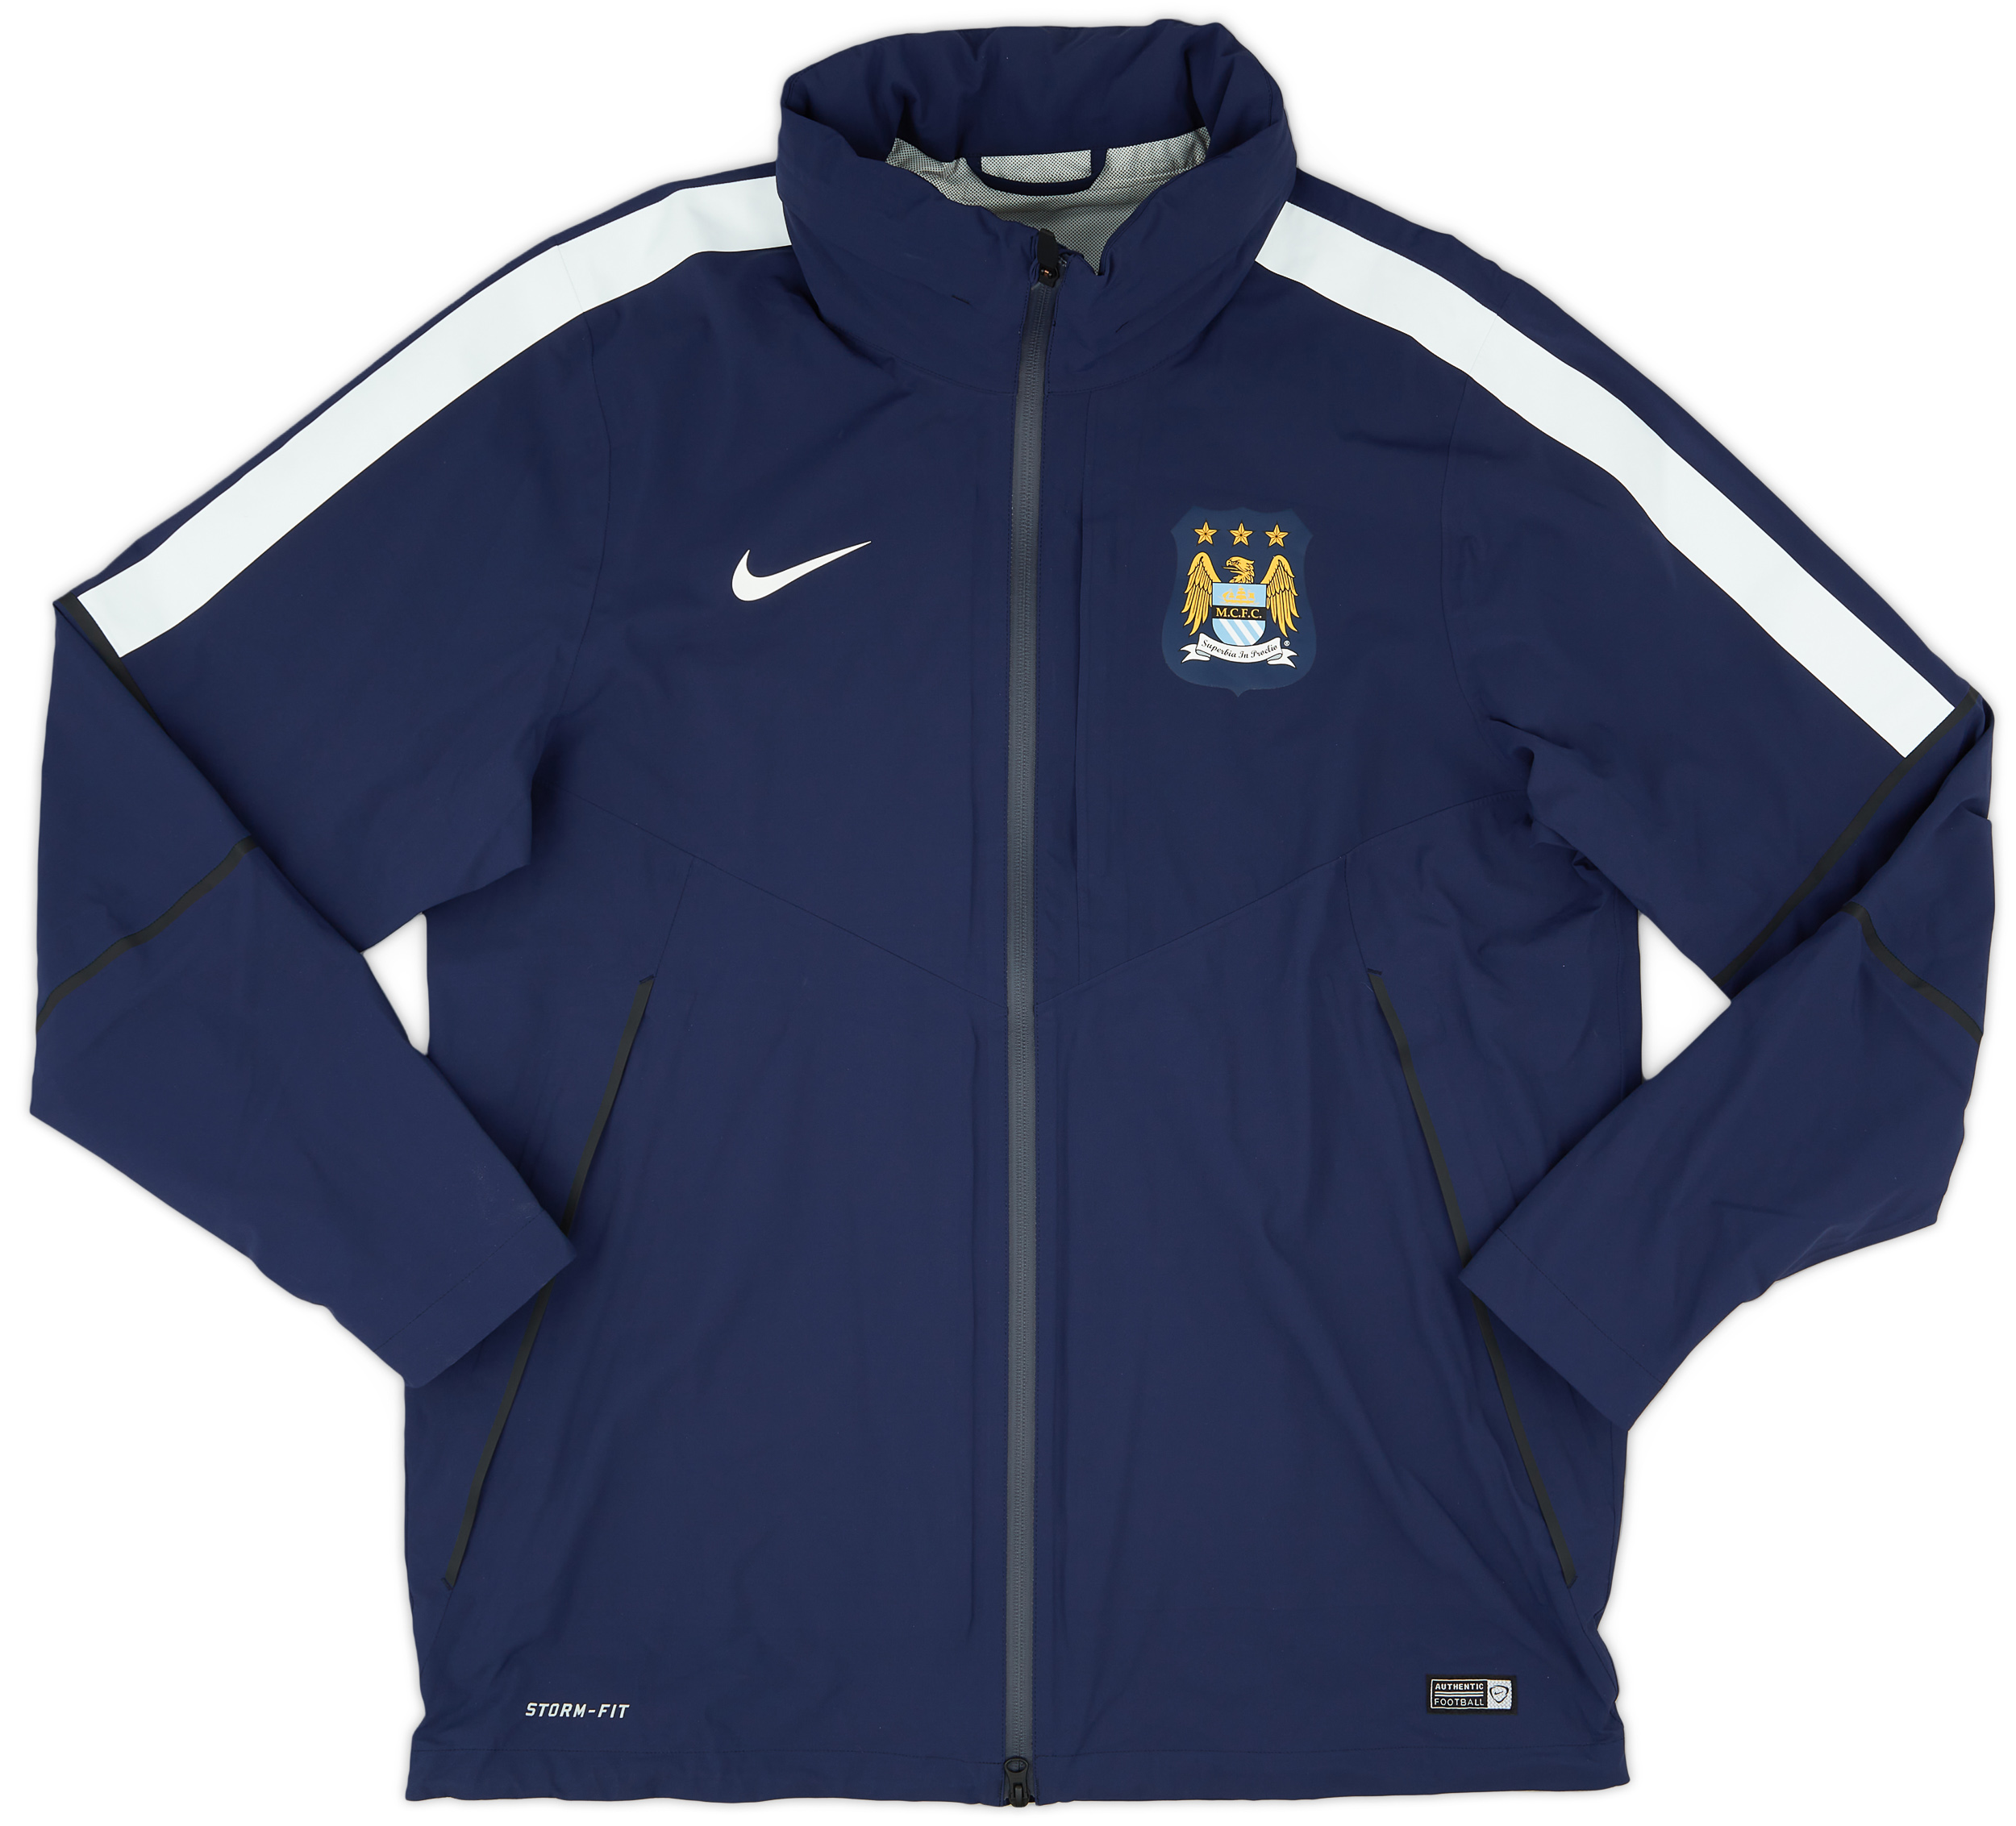 2014-15 Manchester City Nike Storm-Fit Hooded Rain Jacket - 9/10 - (XL)